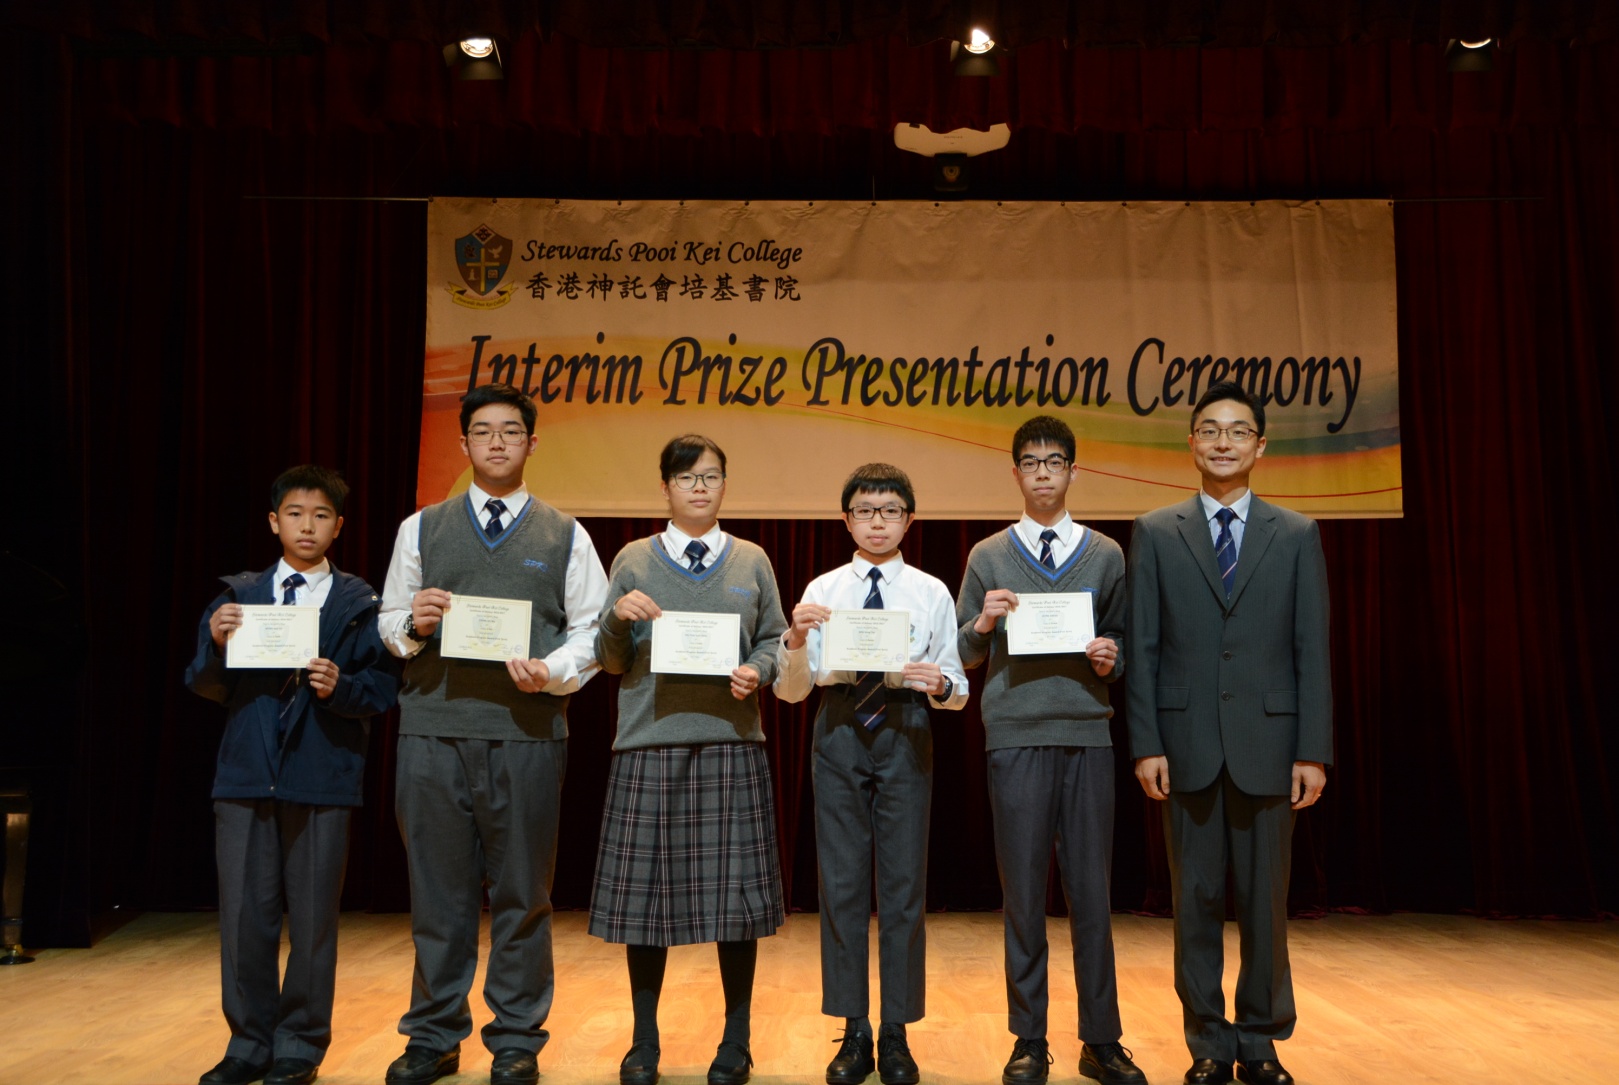 The Interim Prize Presentation Ceremony